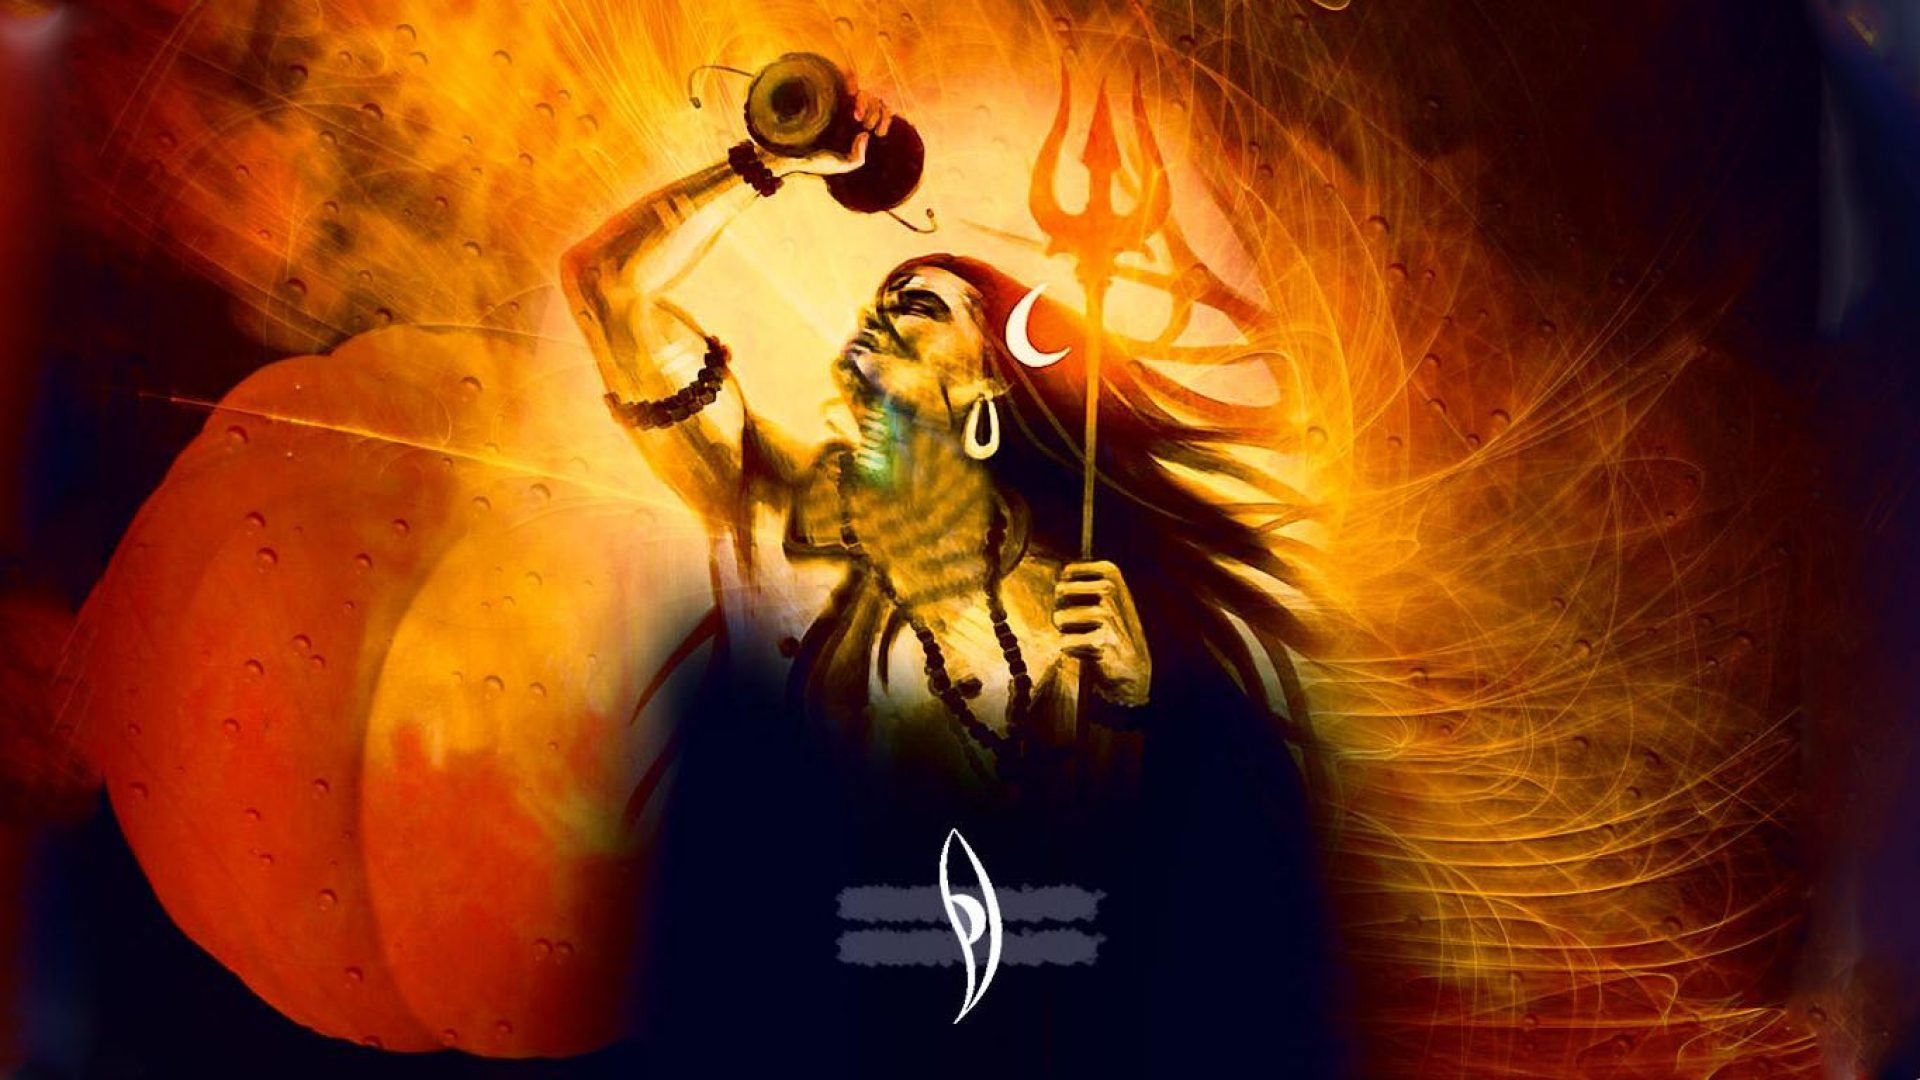 Rudra Avatars Of Lord Shiva Image. Hindu Gods and Goddesses